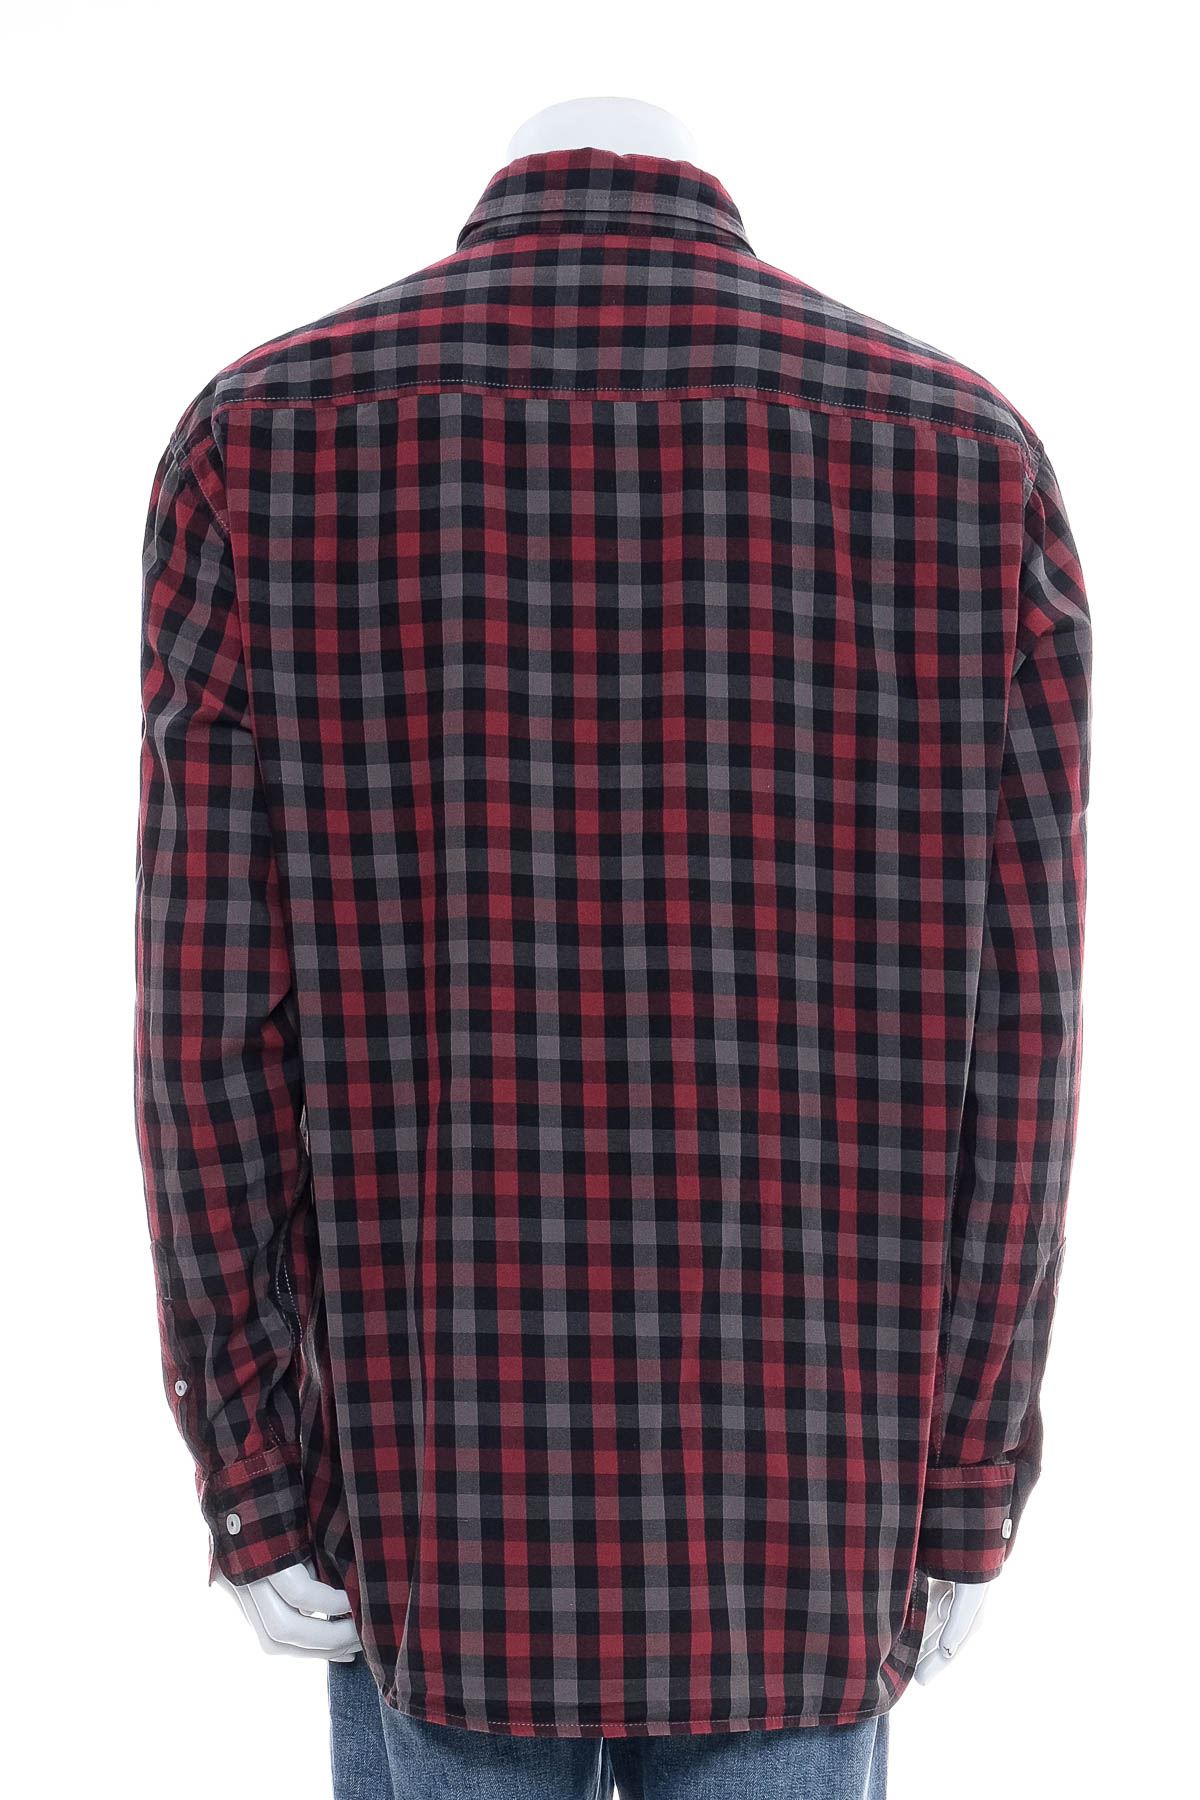 Men's shirt - Kitaro - 1